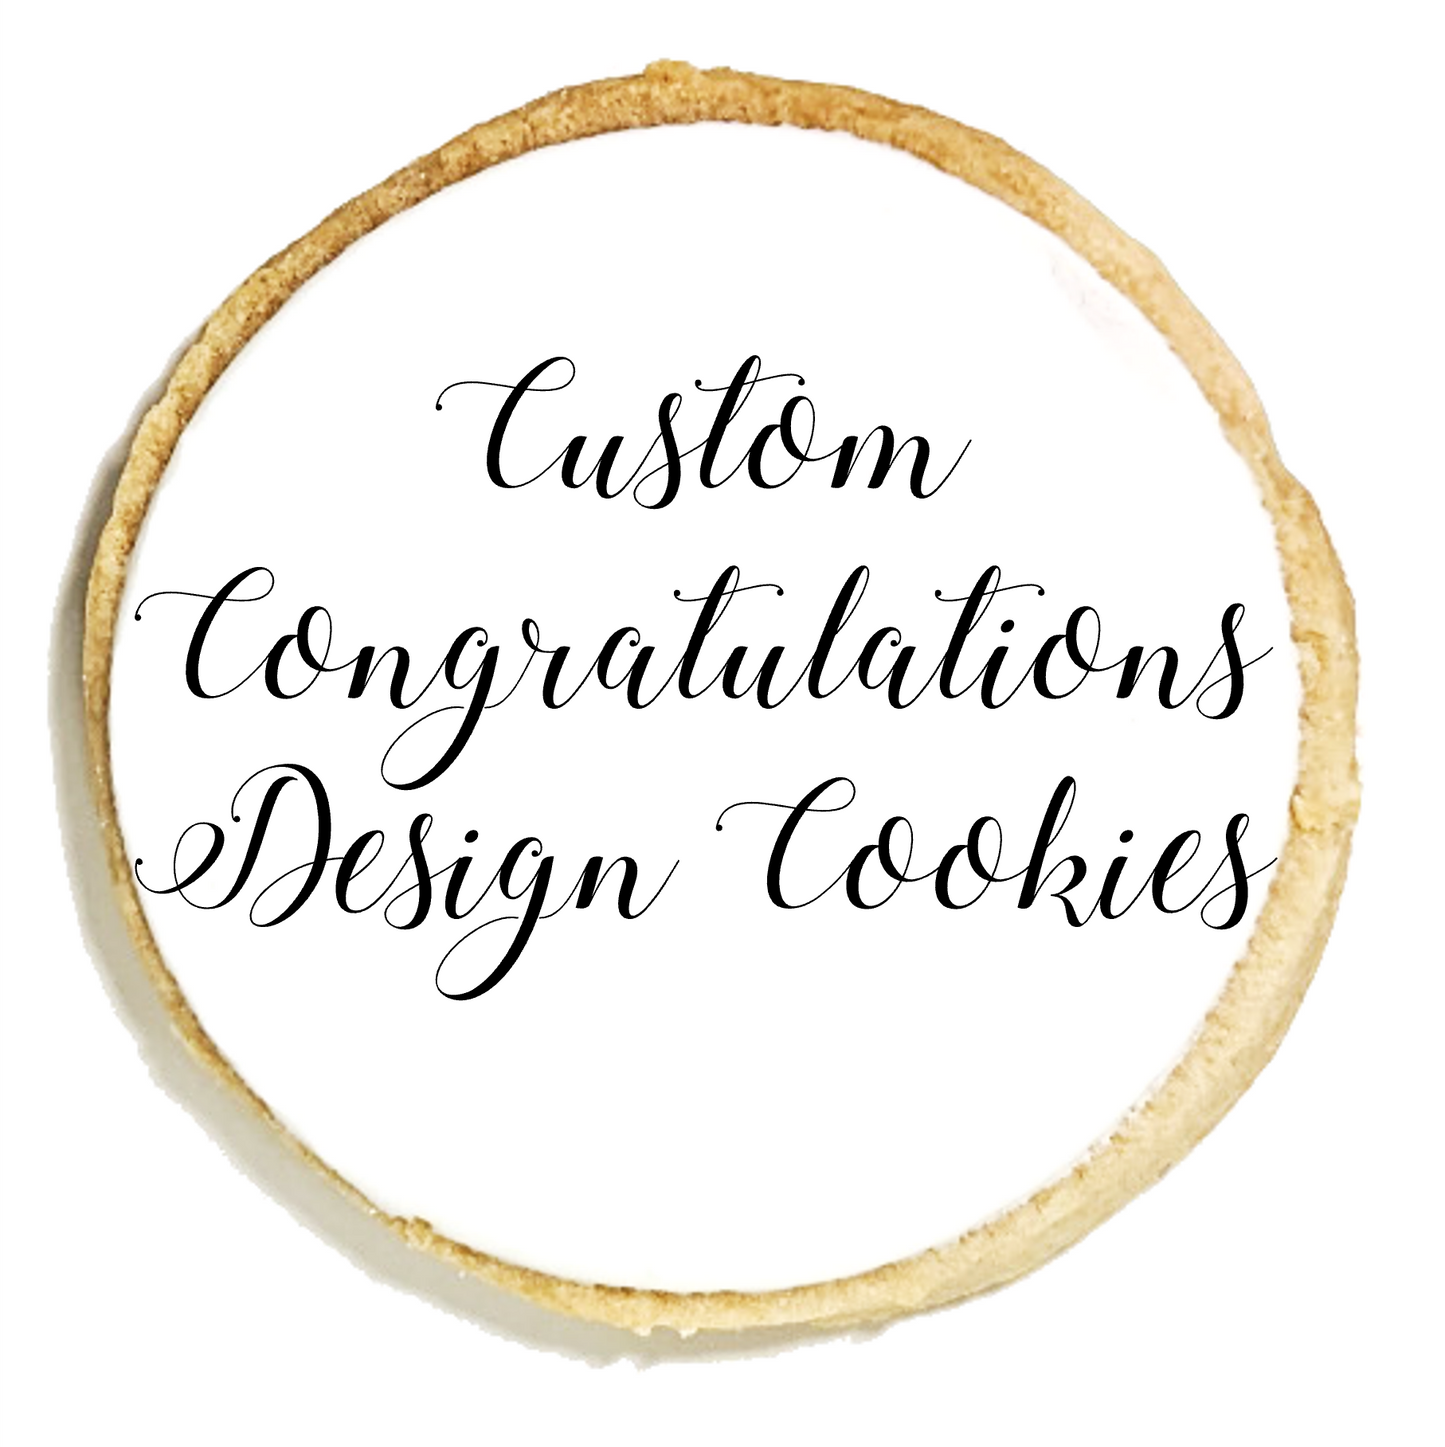 Custom Congratulations Design Cookies